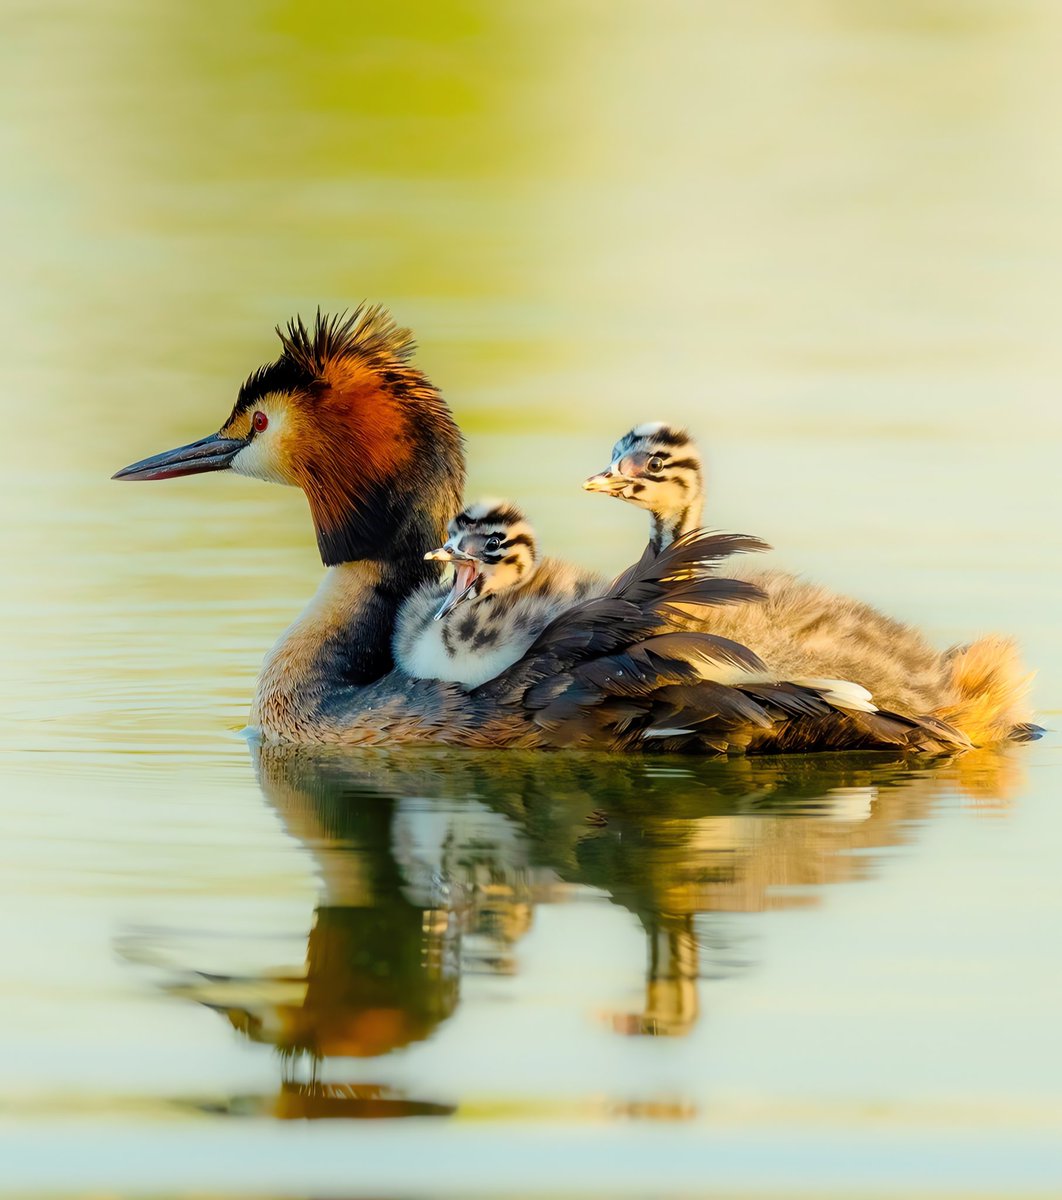 Mother's Love Guess the name of the bird🐦 #birds #nature #photos #LovelyBirdsInChina